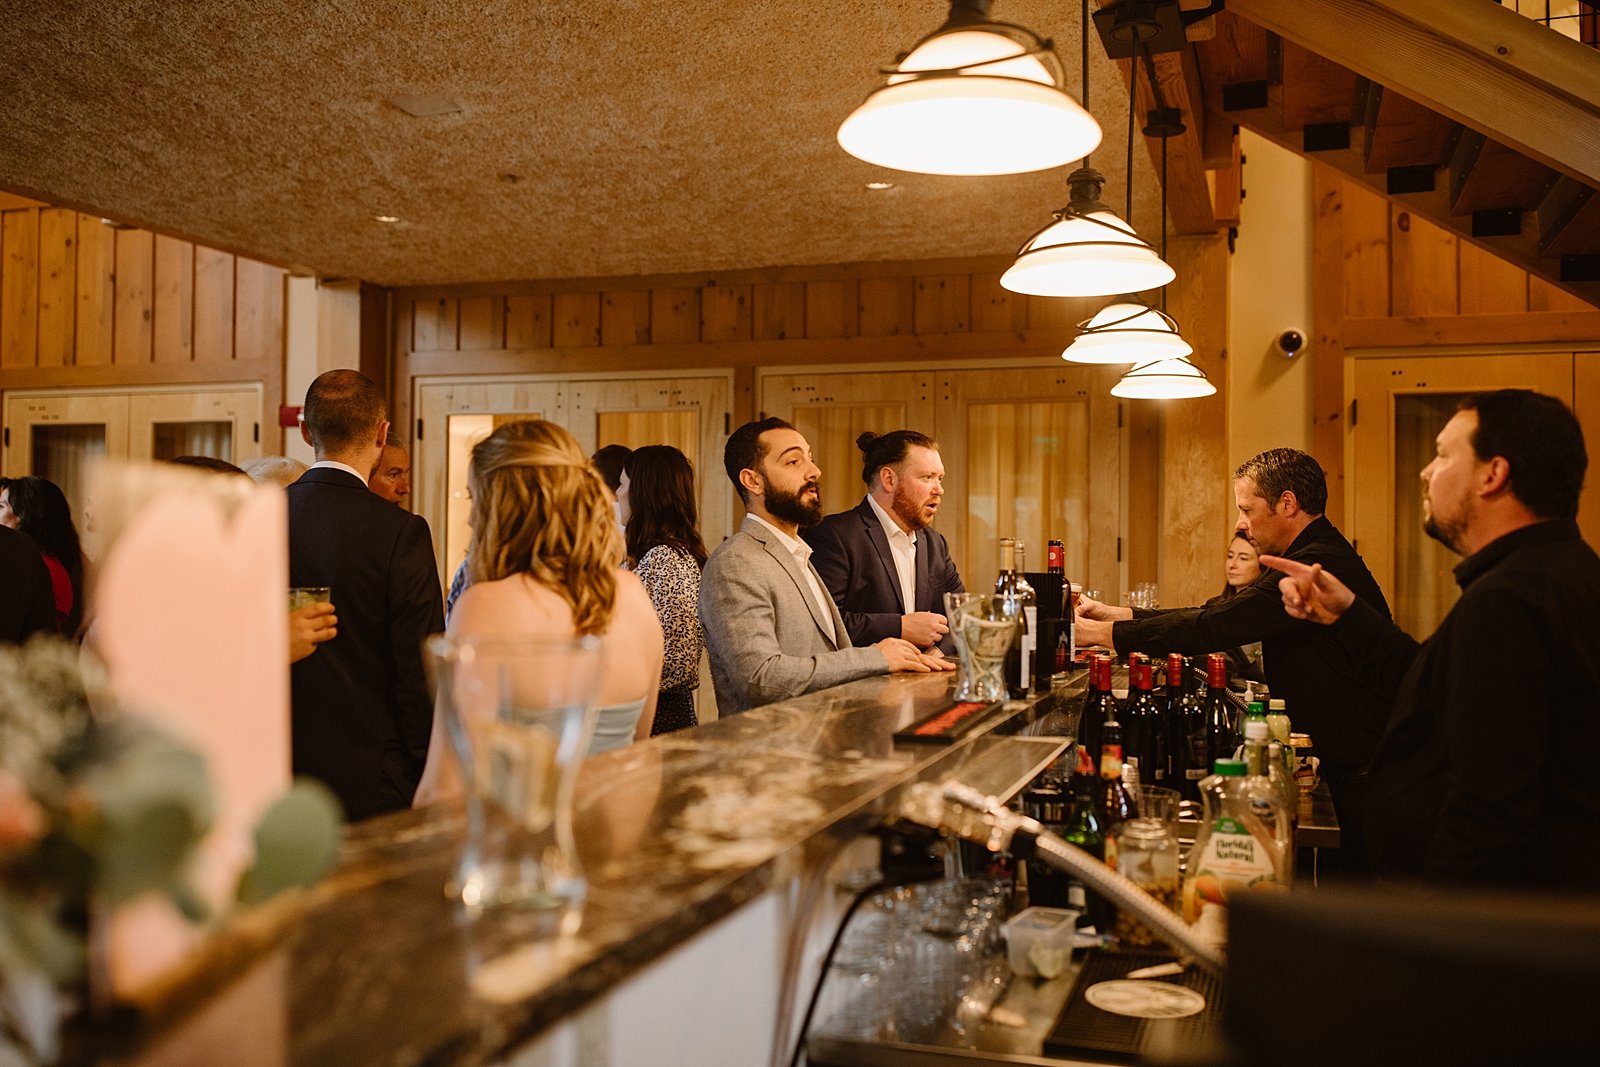 wedding guests ordering drinks from bar, summit county wedding bar, silverthorne pavilion wedding bar, silverthorne colorado cocktail bar, wedding cocktails, mountain wedding bar